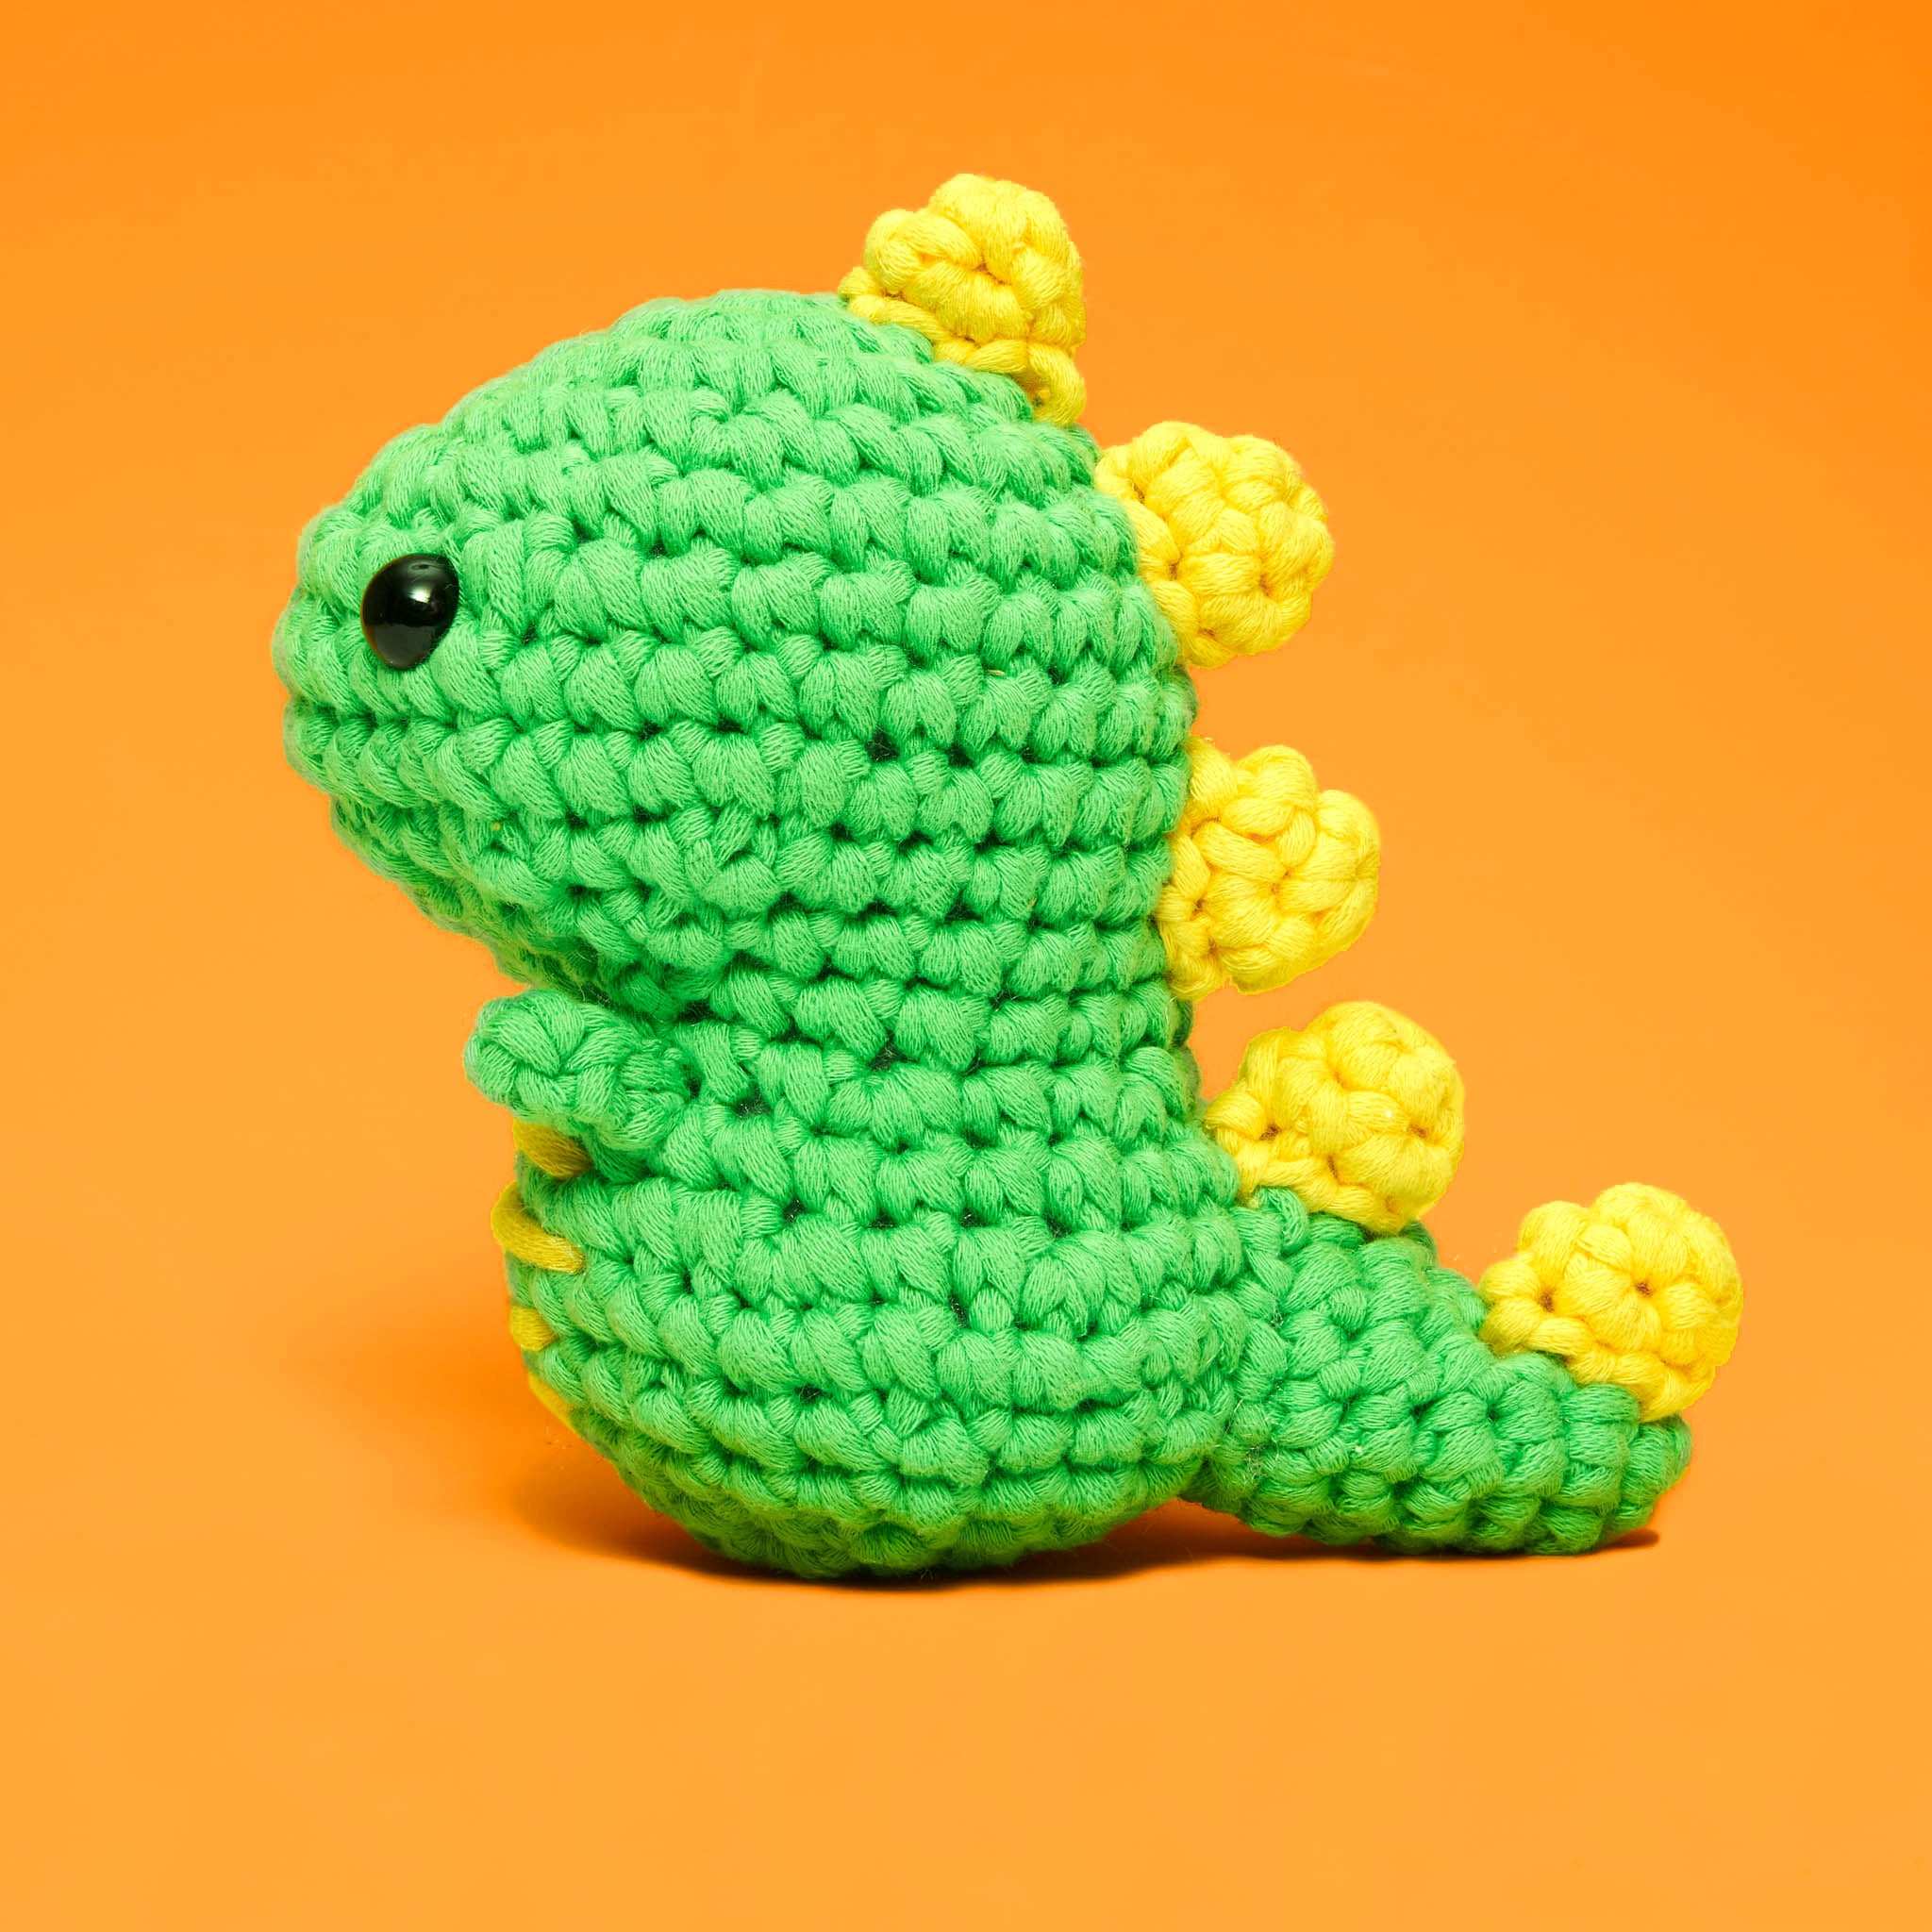 Amigurumi Crochet Kits for Beginners - Learn How to Crochet – Wee